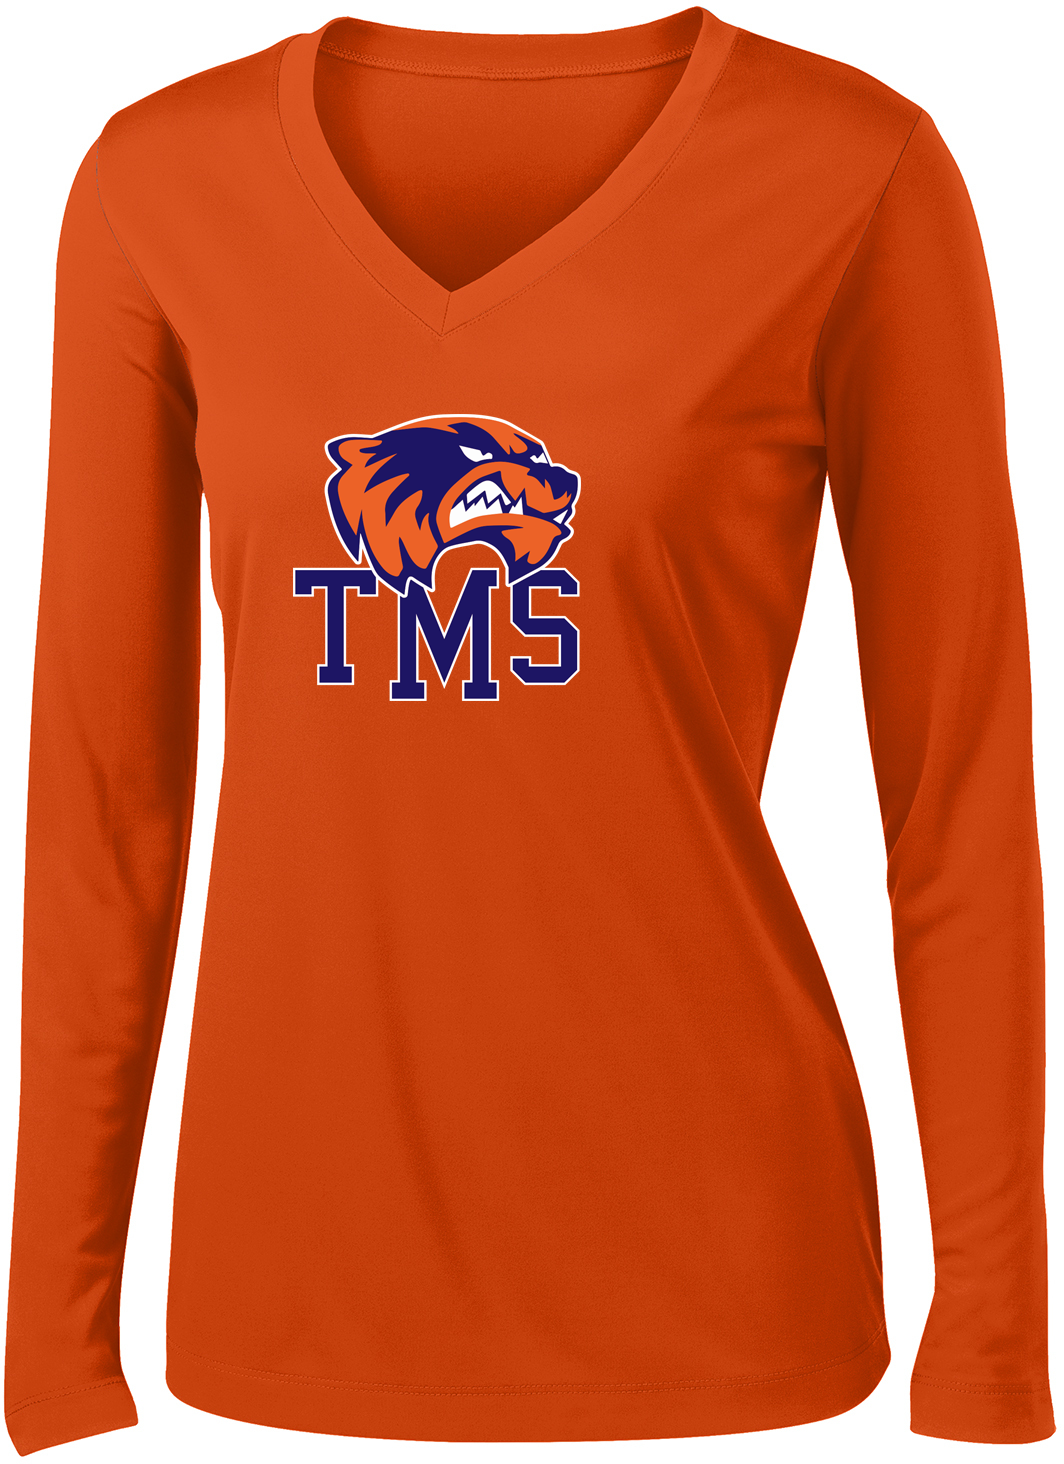 TMS Track & Field Women's Long Sleeve Performance Shirt